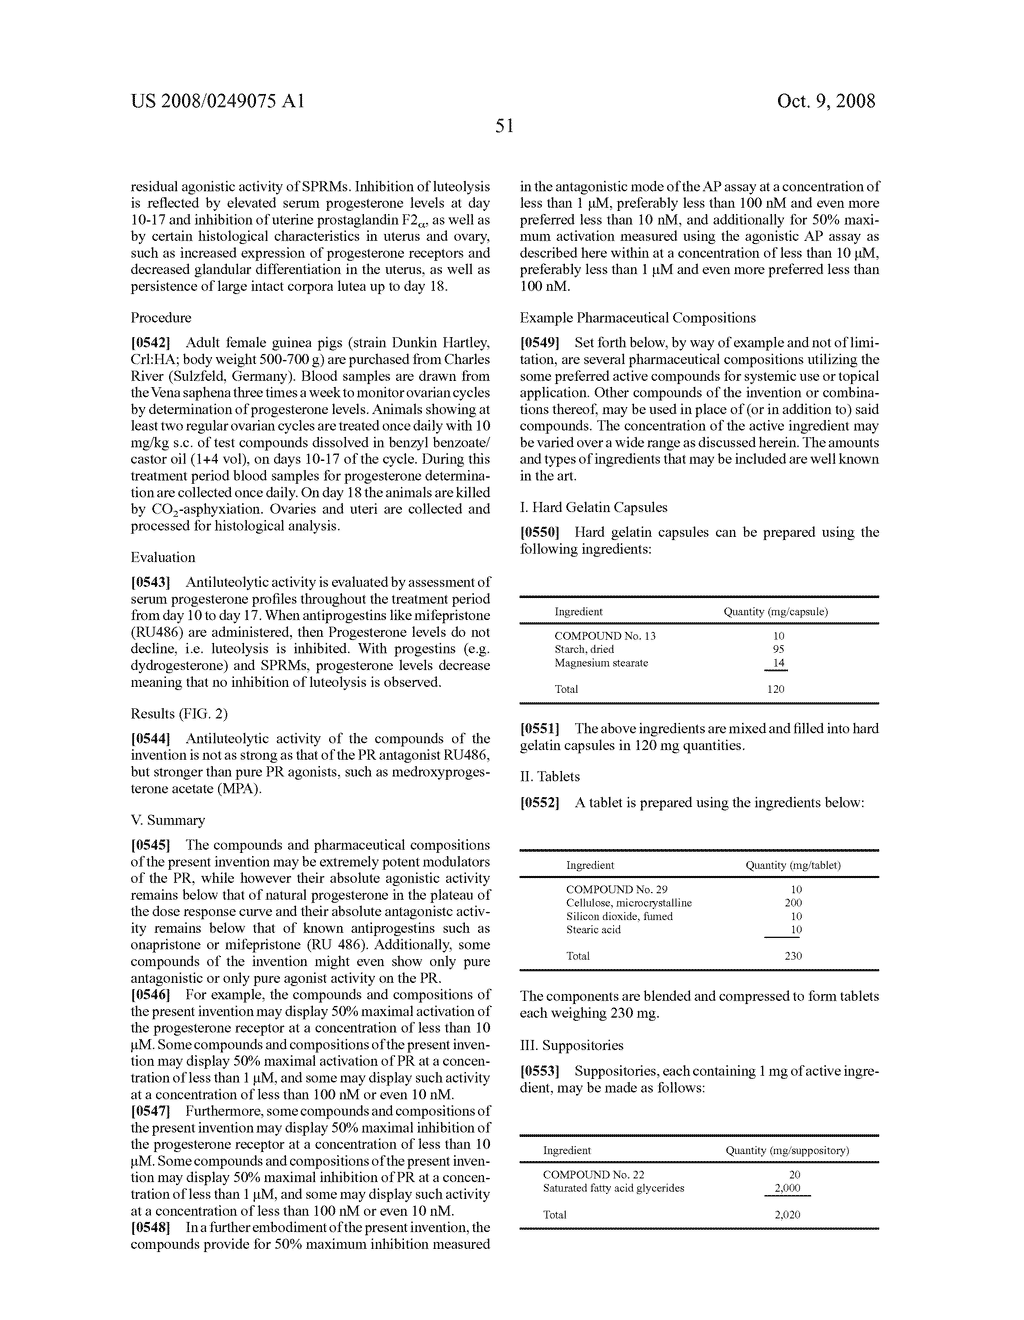 C11 Modified Retrosteroids as Progesterone Receptor Modulator Compounds - diagram, schematic, and image 53